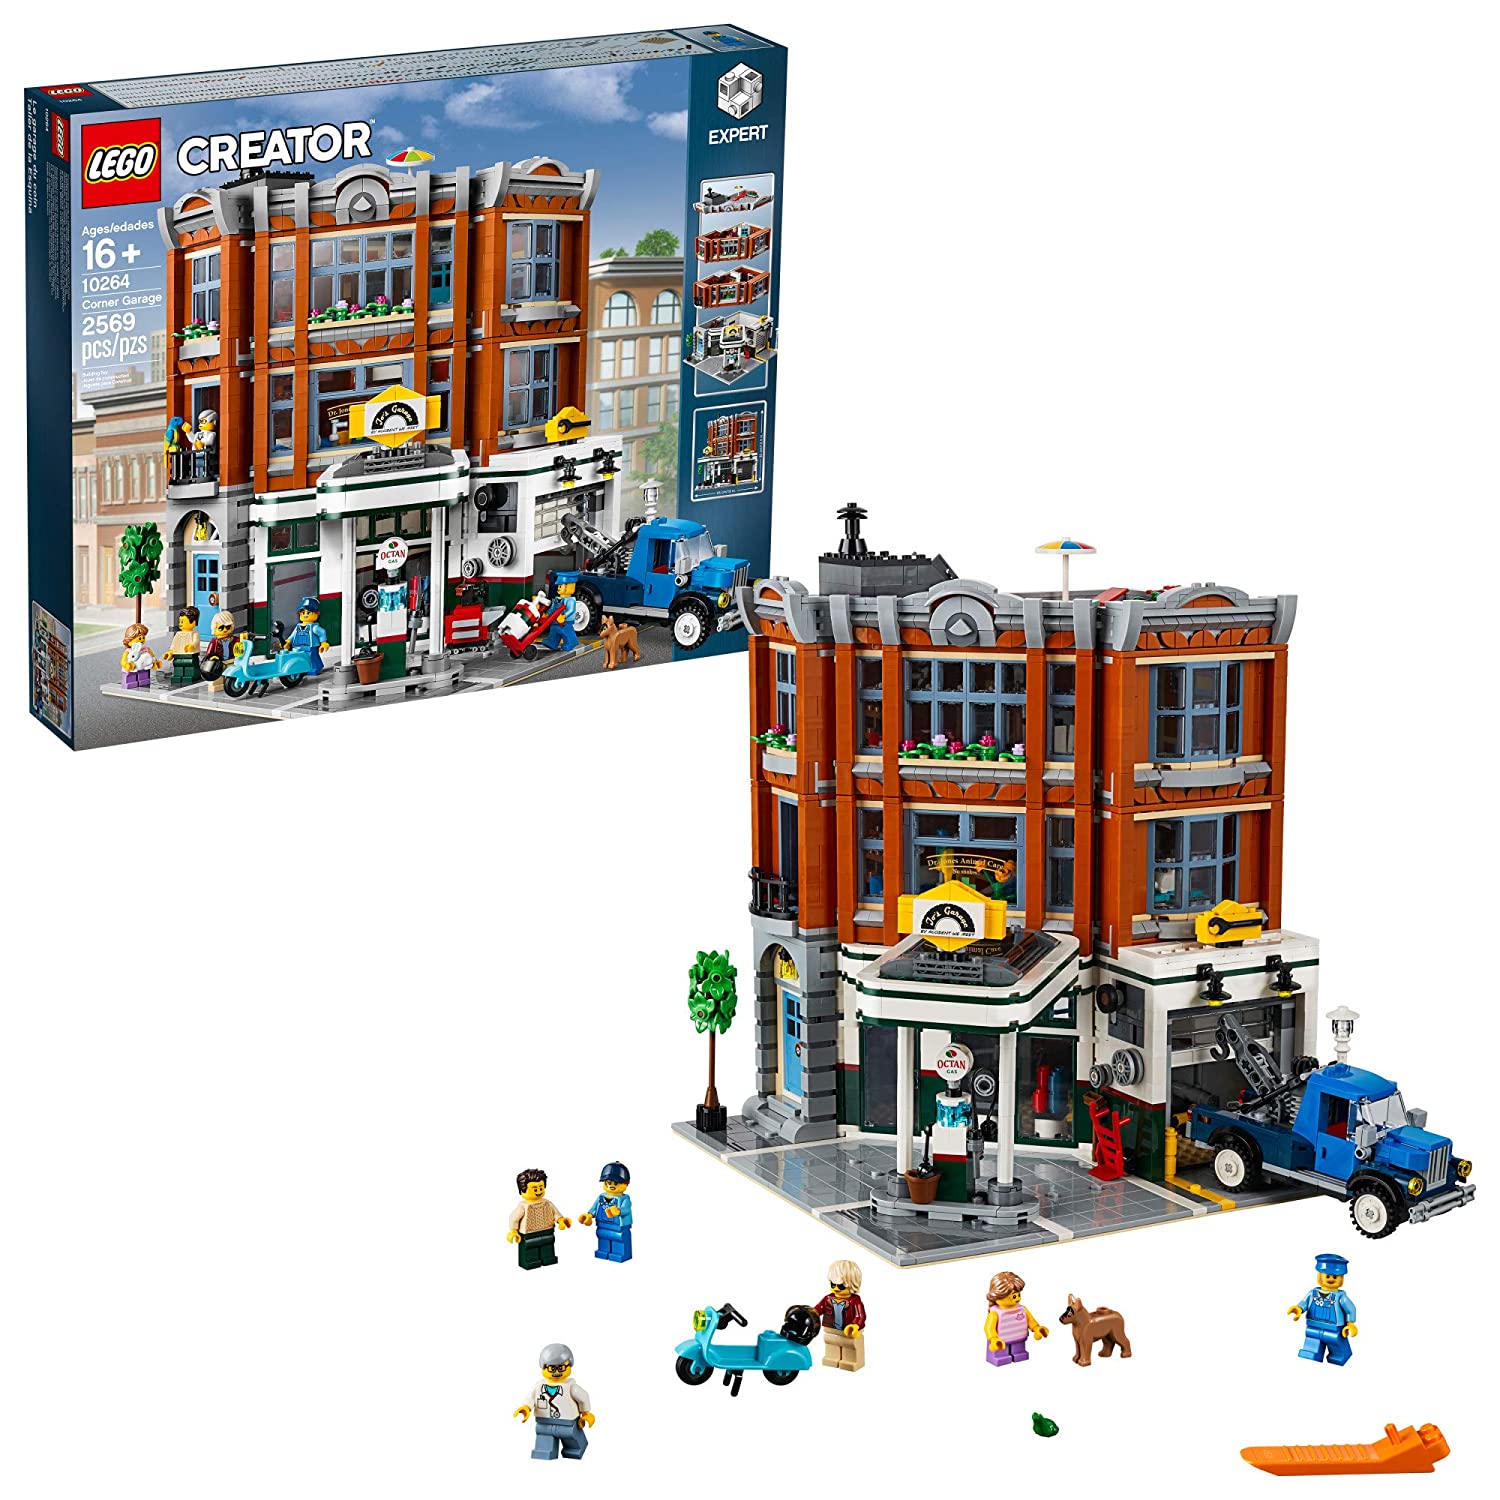 9 Best LEGO Modular Buildings Set 2023 - Buying Guide 2